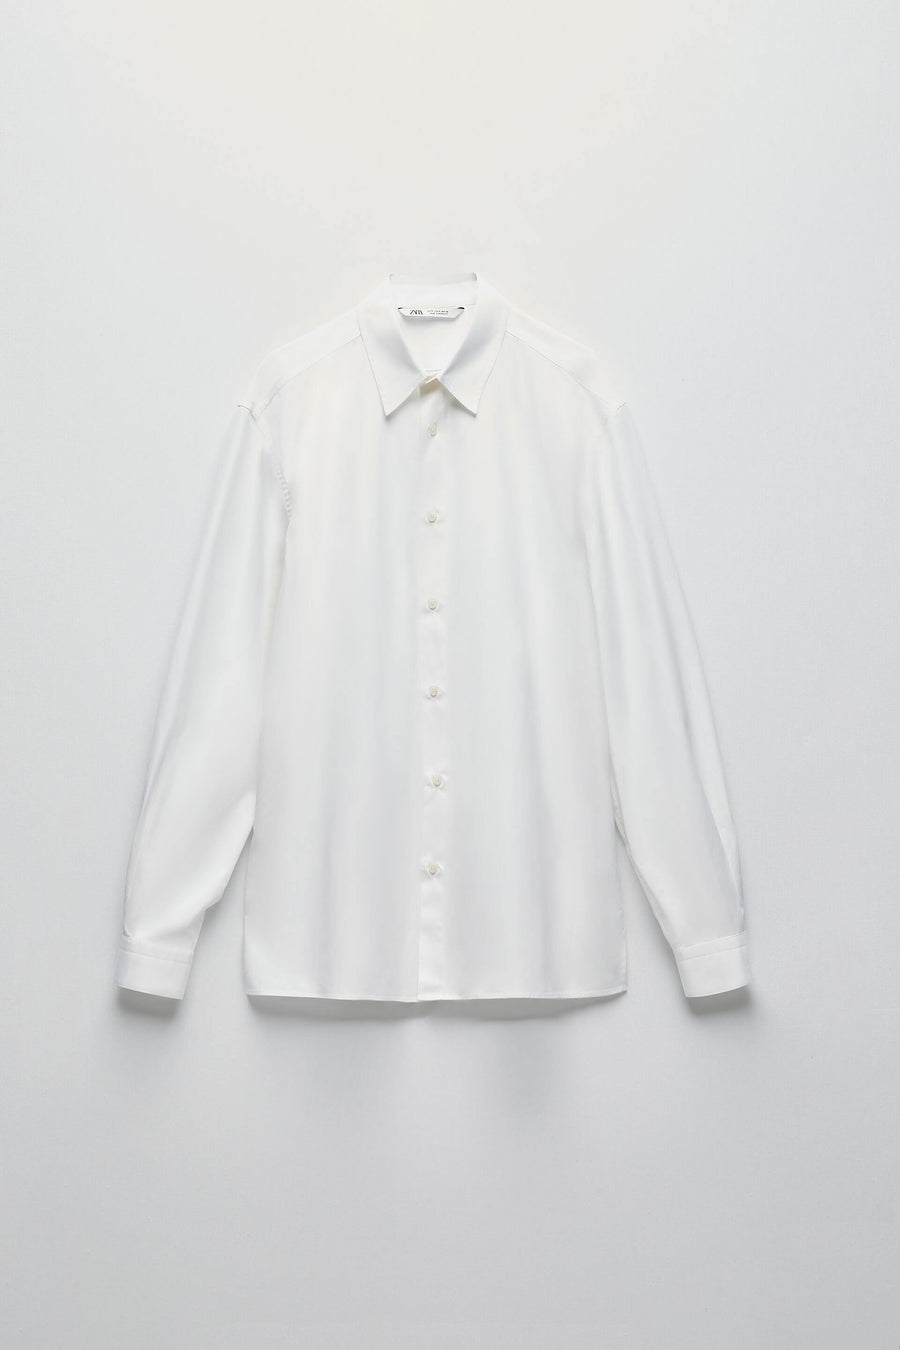 ZaraMan Casual L/S Plain Shirt 5822/300/250